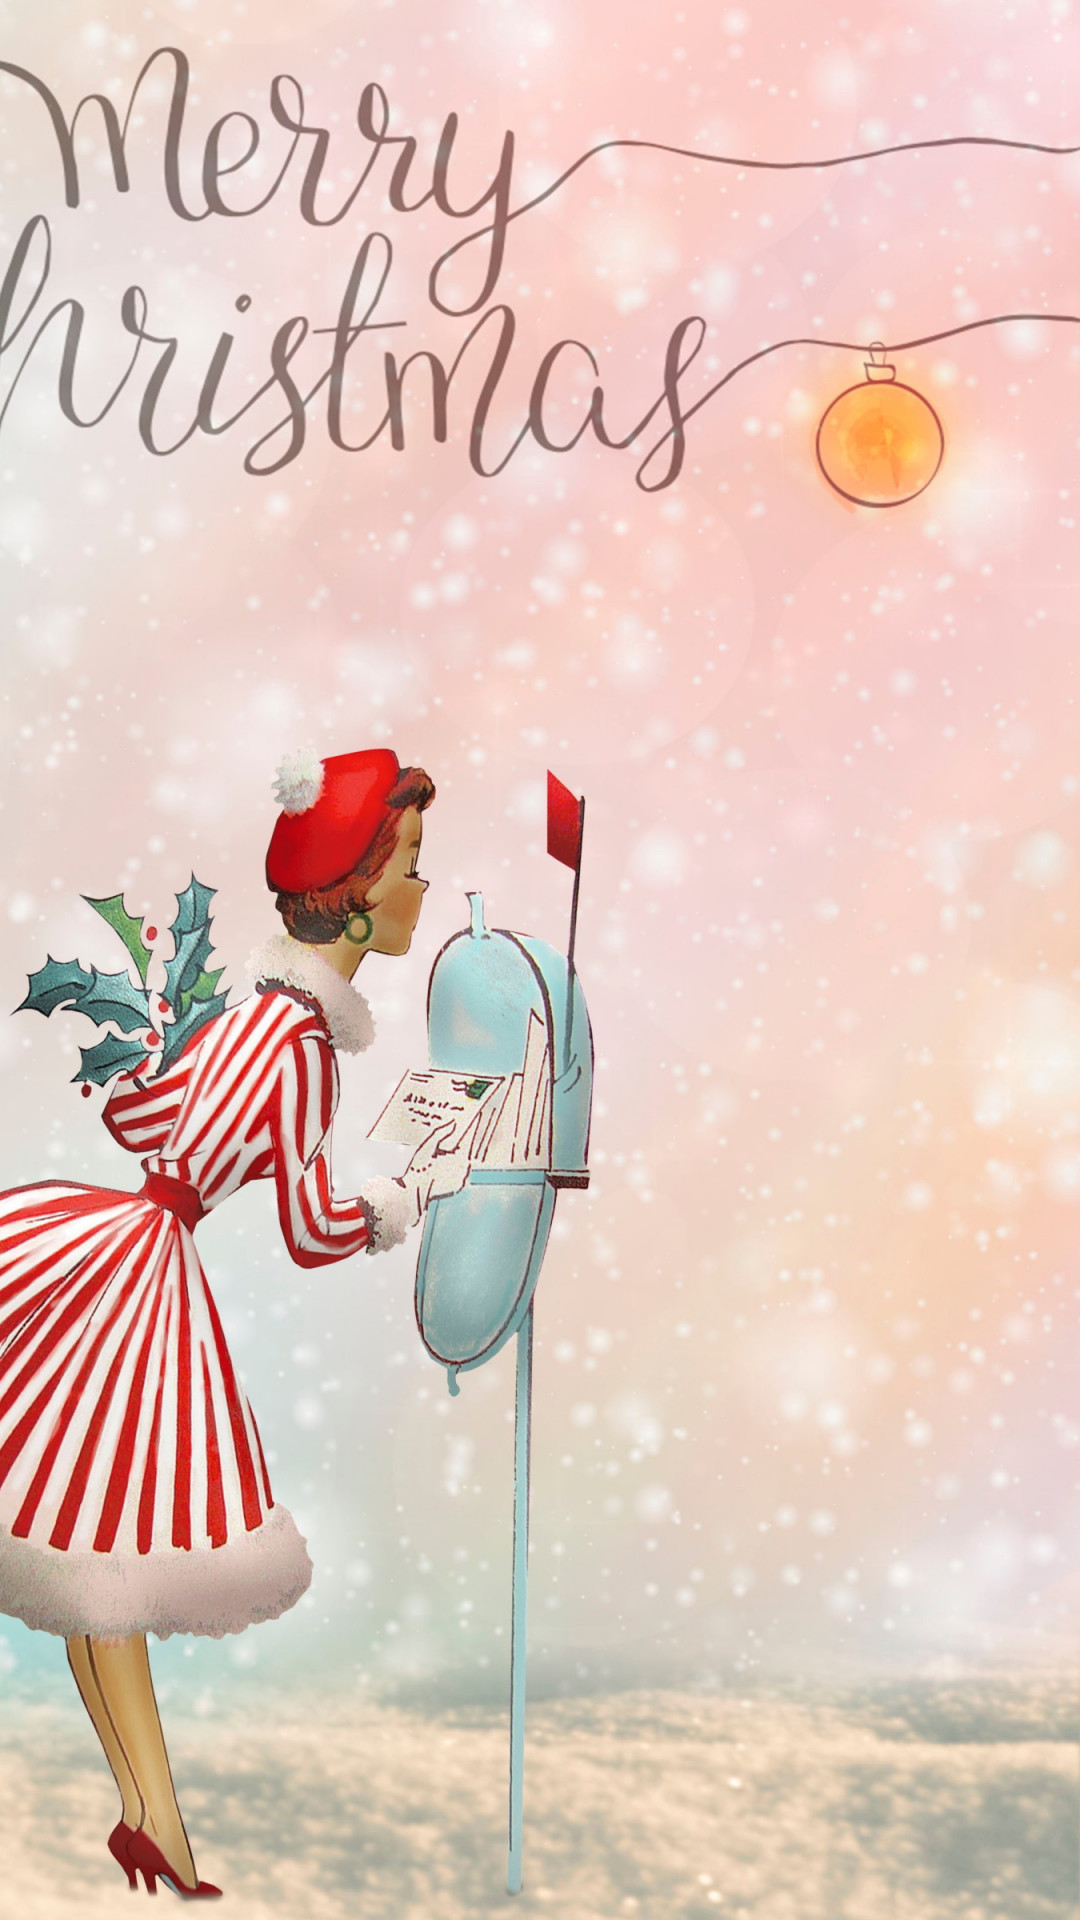 Merry Christmas 2020 Illustration wallpaper 1080x1920